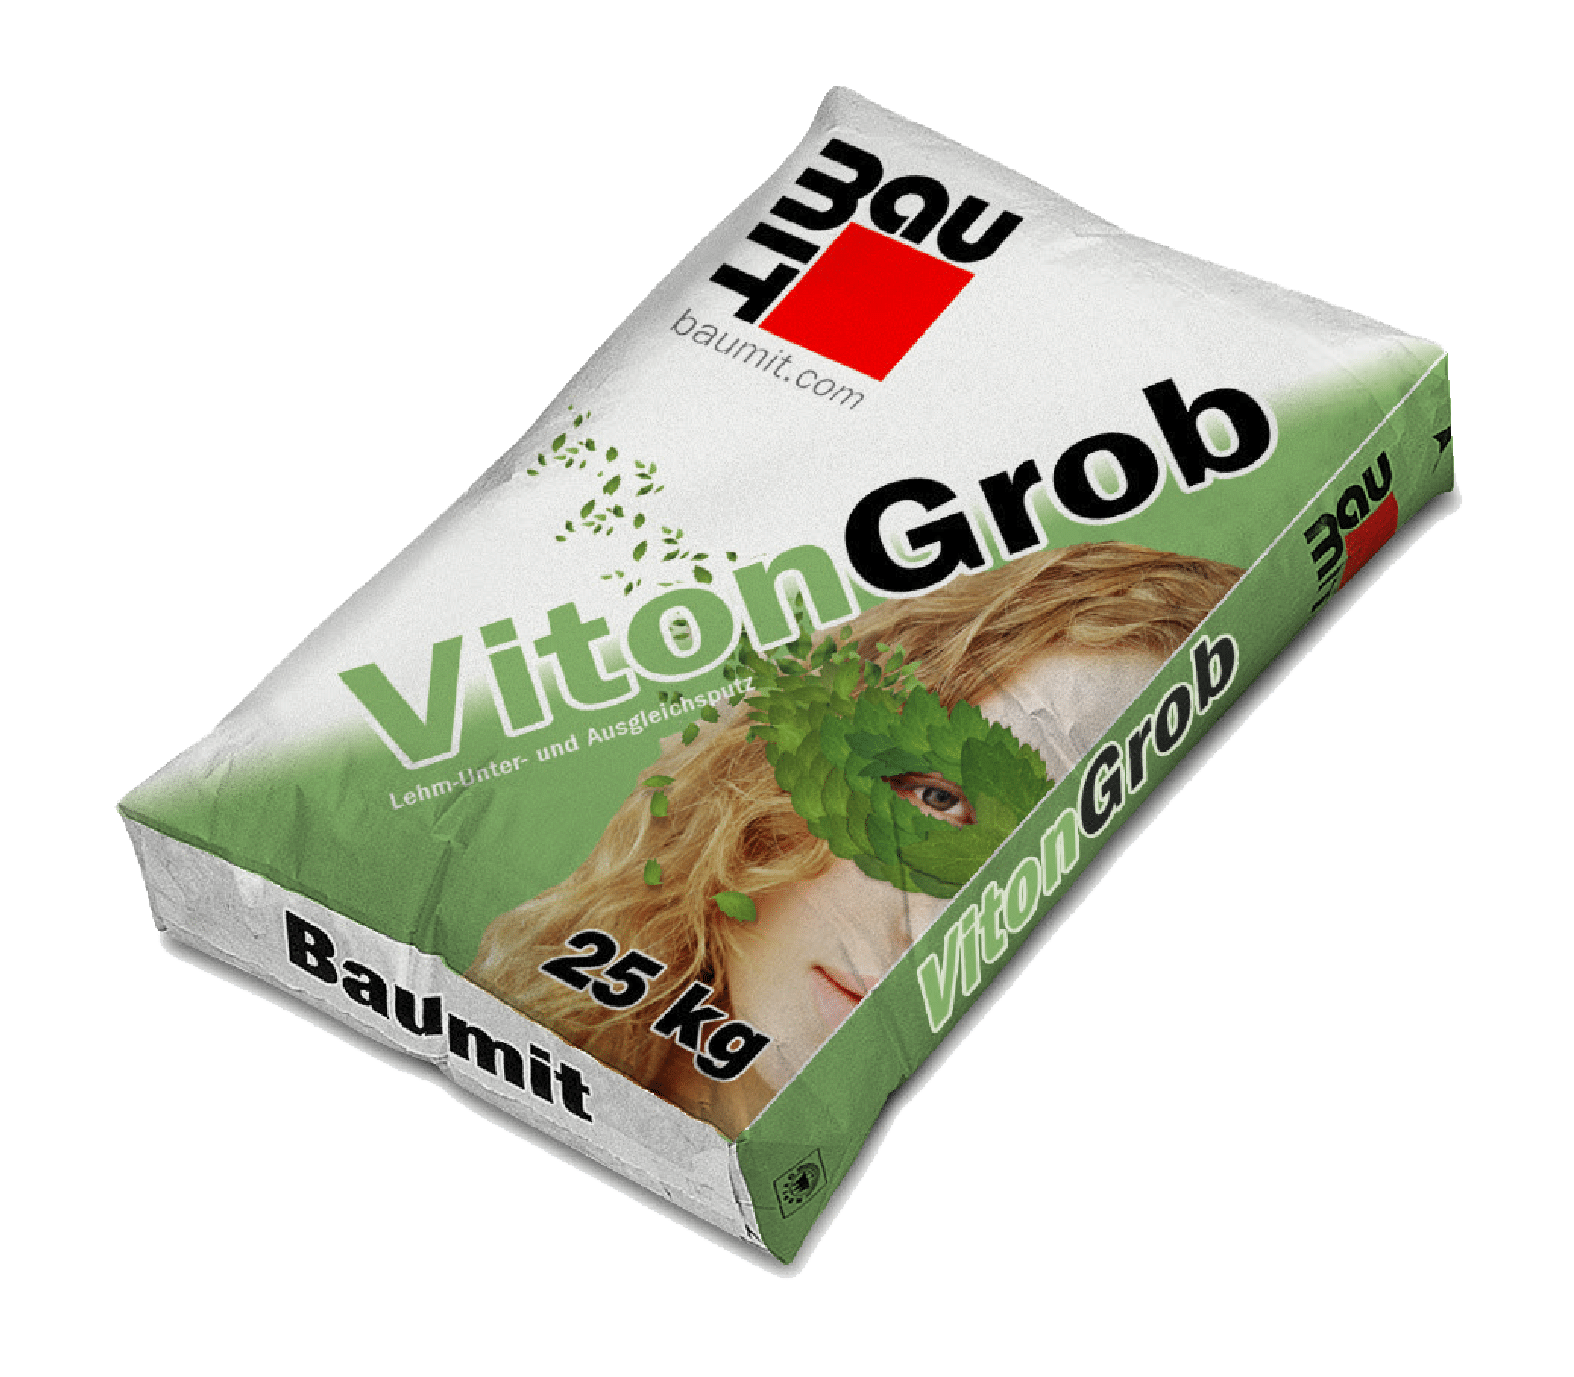 Viton-Grob-image